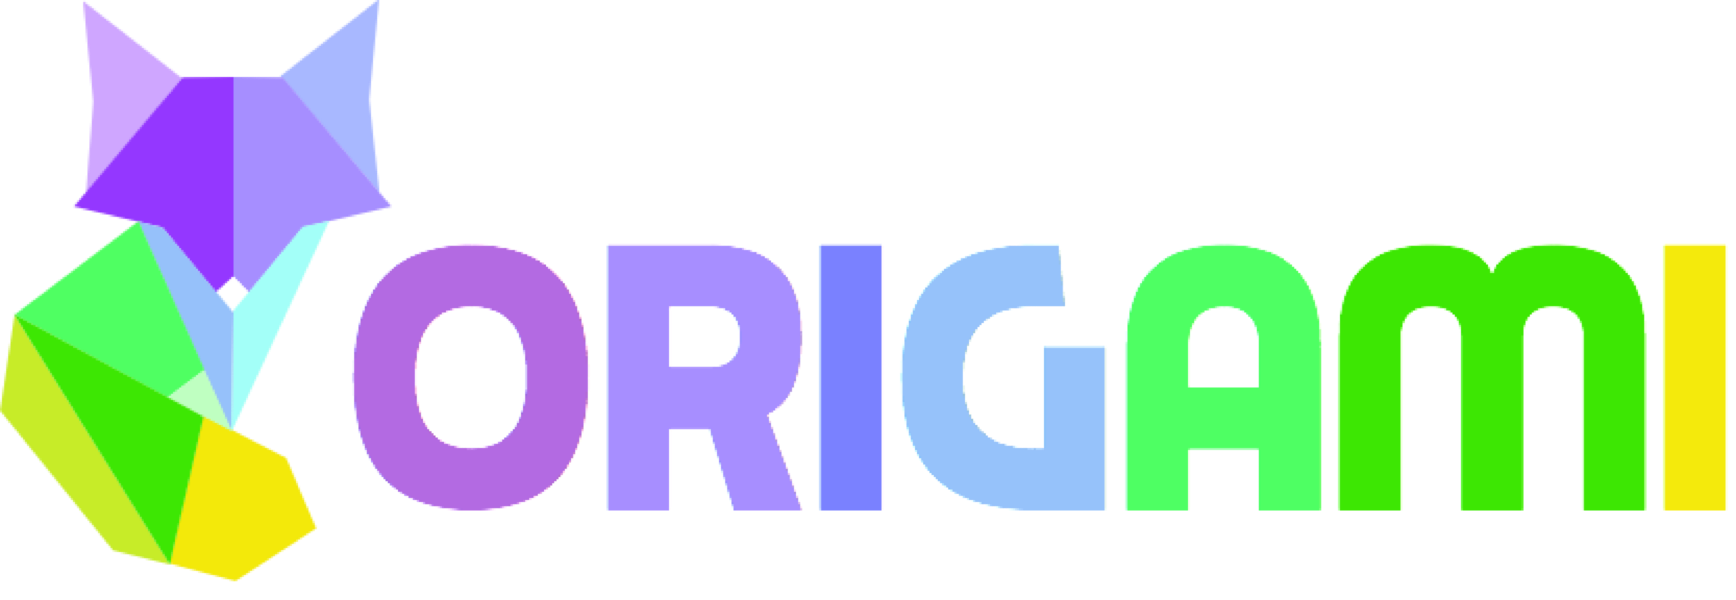 logo_origami-1.png